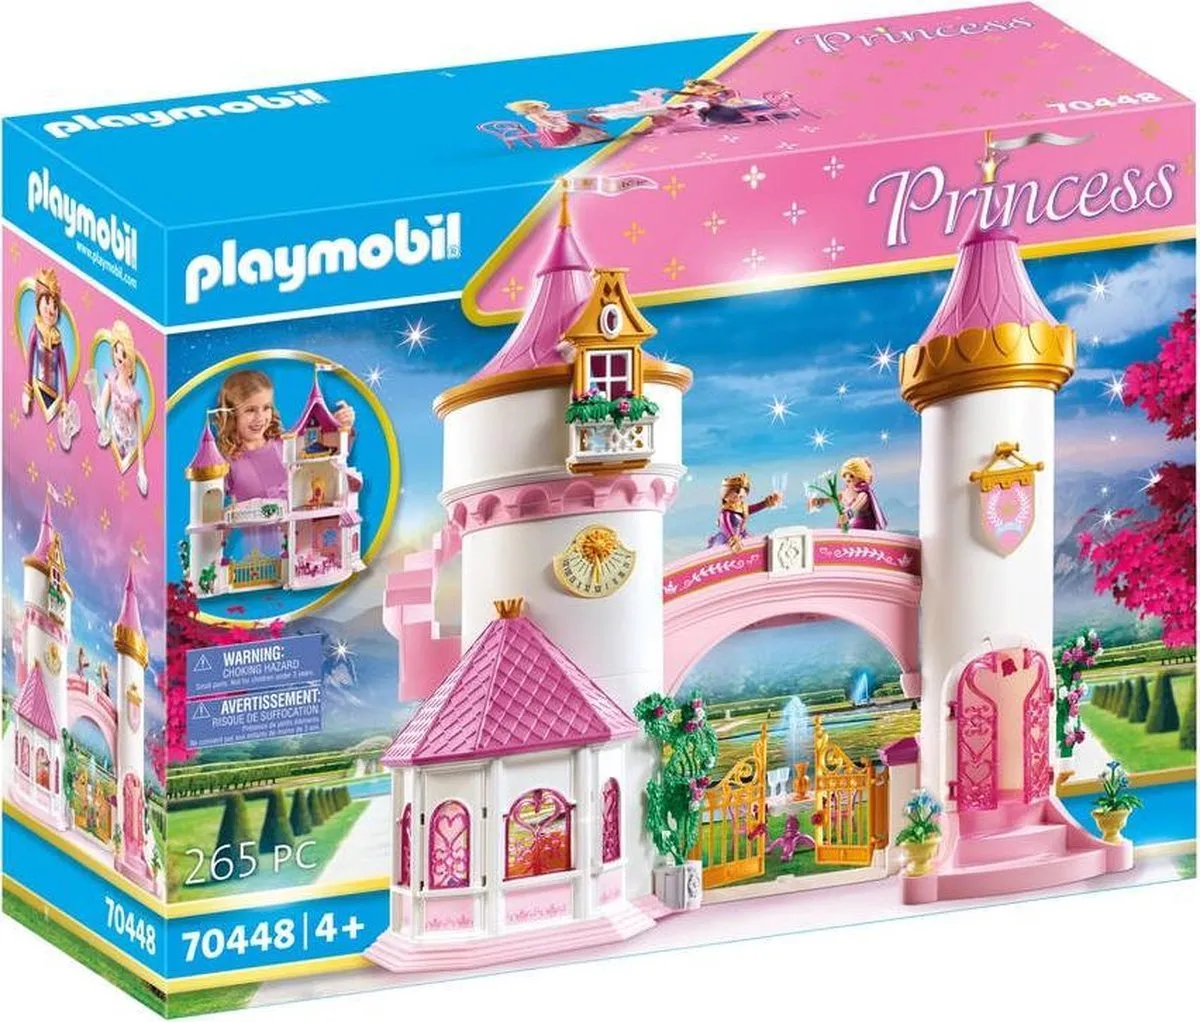 PLAYMOBIL Princess Prinsessenkasteel - 70448 speelgoed